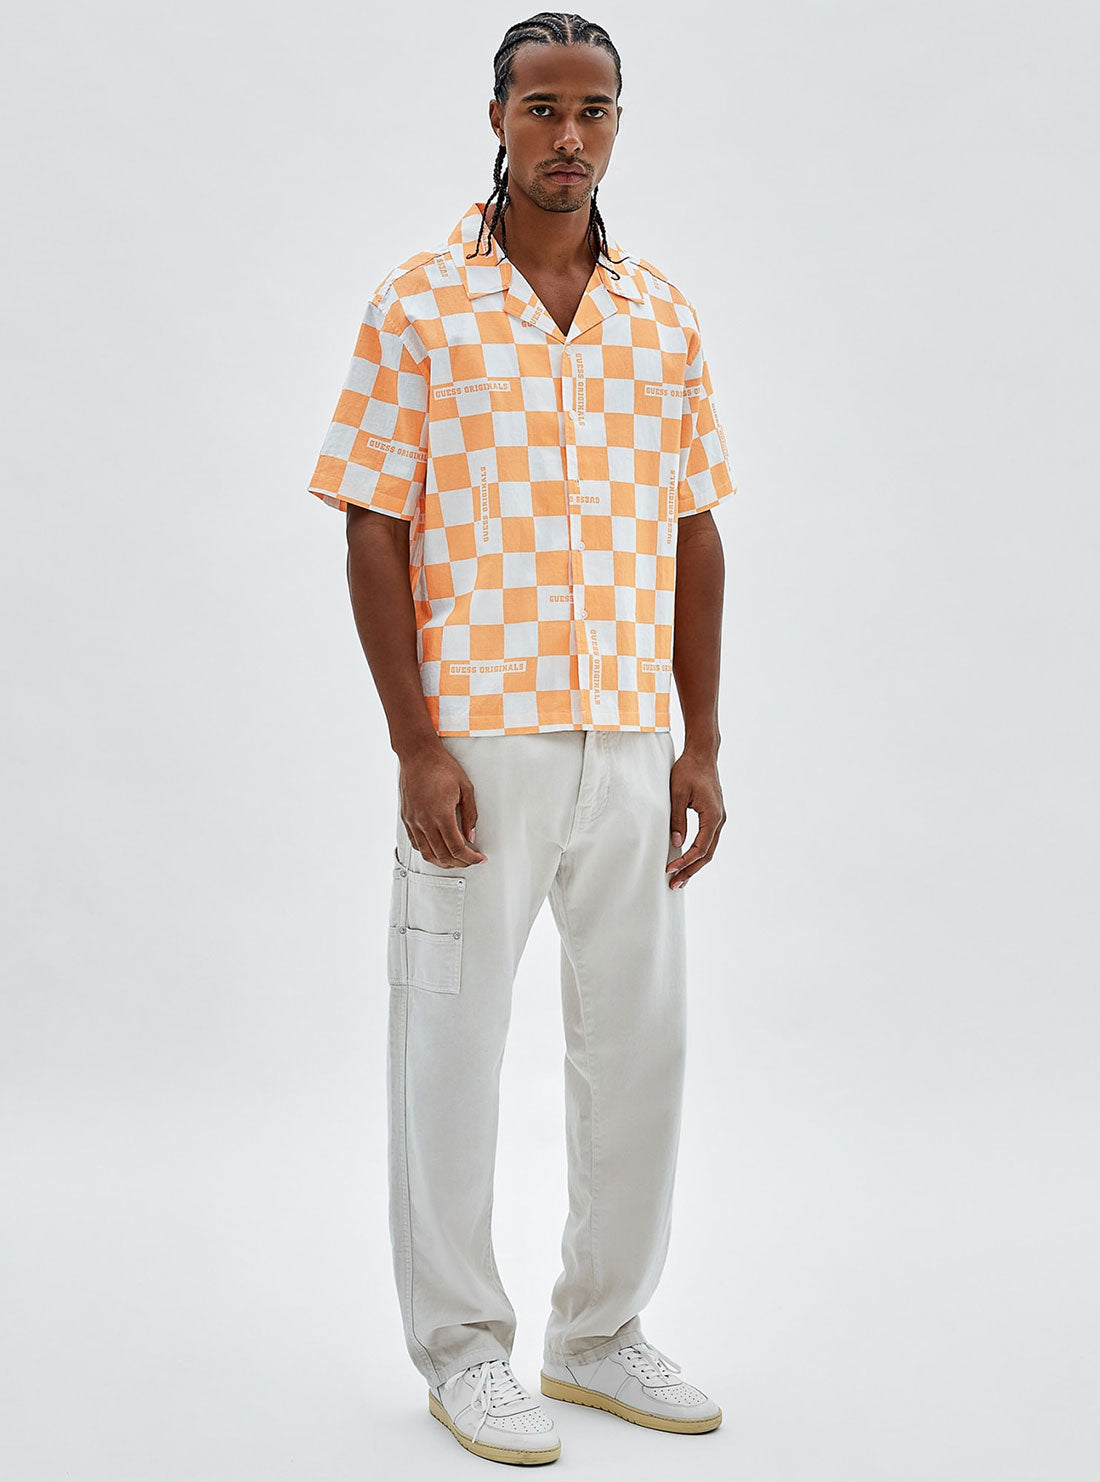 GUESS Men's Guess Originals Orange Checker Shirt M2YH00WEOZ0 Full View